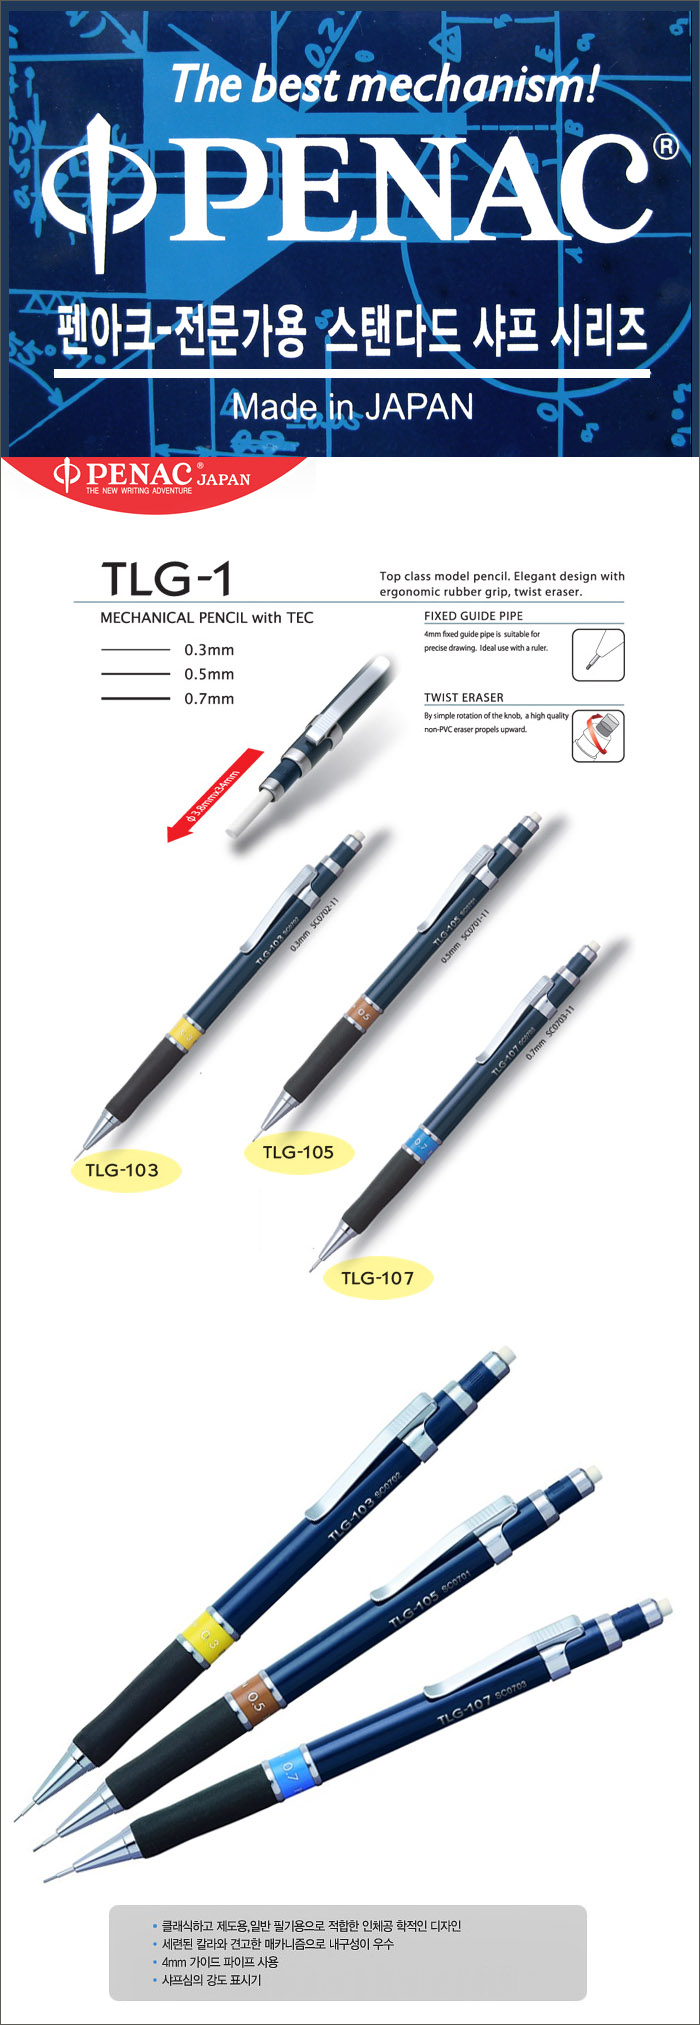 Penak Drawing Mechanical Pencils TLG-1